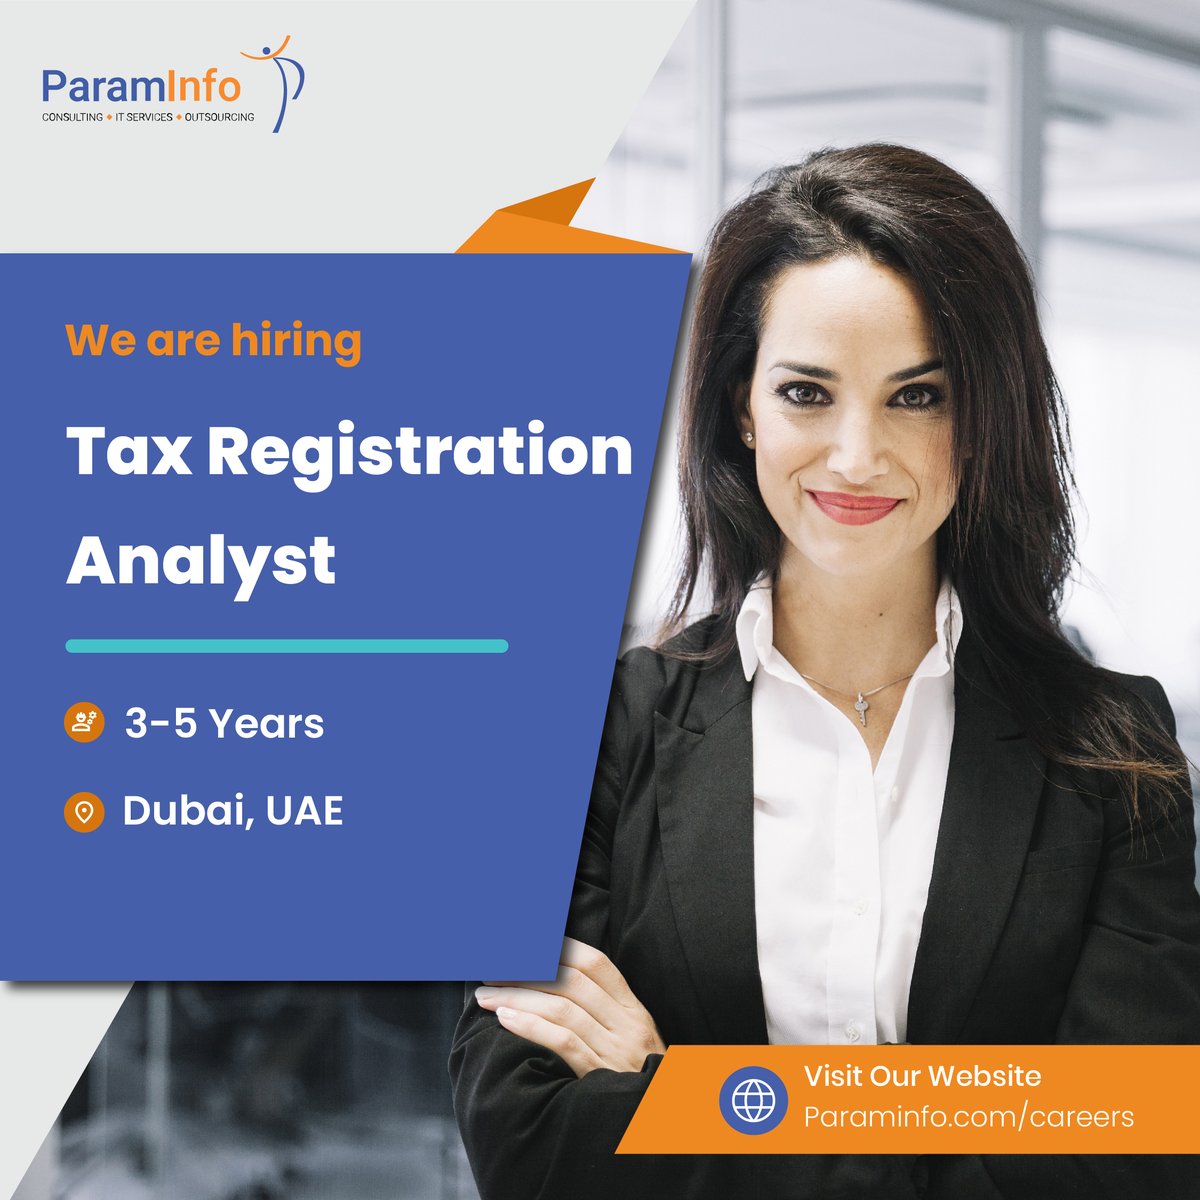 𝐉𝐨𝐛 𝐓𝐢𝐭𝐥𝐞: Tax Registration Analyst 📢
𝐀𝐩𝐩𝐥𝐲 𝐍𝐨𝐰: bit.ly/3WtatYM 👈
𝐄𝐱𝐩𝐞𝐫𝐢𝐞𝐧𝐜𝐞:3-5 Years
𝐋𝐨𝐜𝐚𝐭𝐢𝐨𝐧: Dubai, UAE

#ApplyNow #uaejobs #dubai #TaxRegistrationAnalyst #taxregistration #taxlaw #TaxPolicy #financialplanning #bilingual #paraminfo